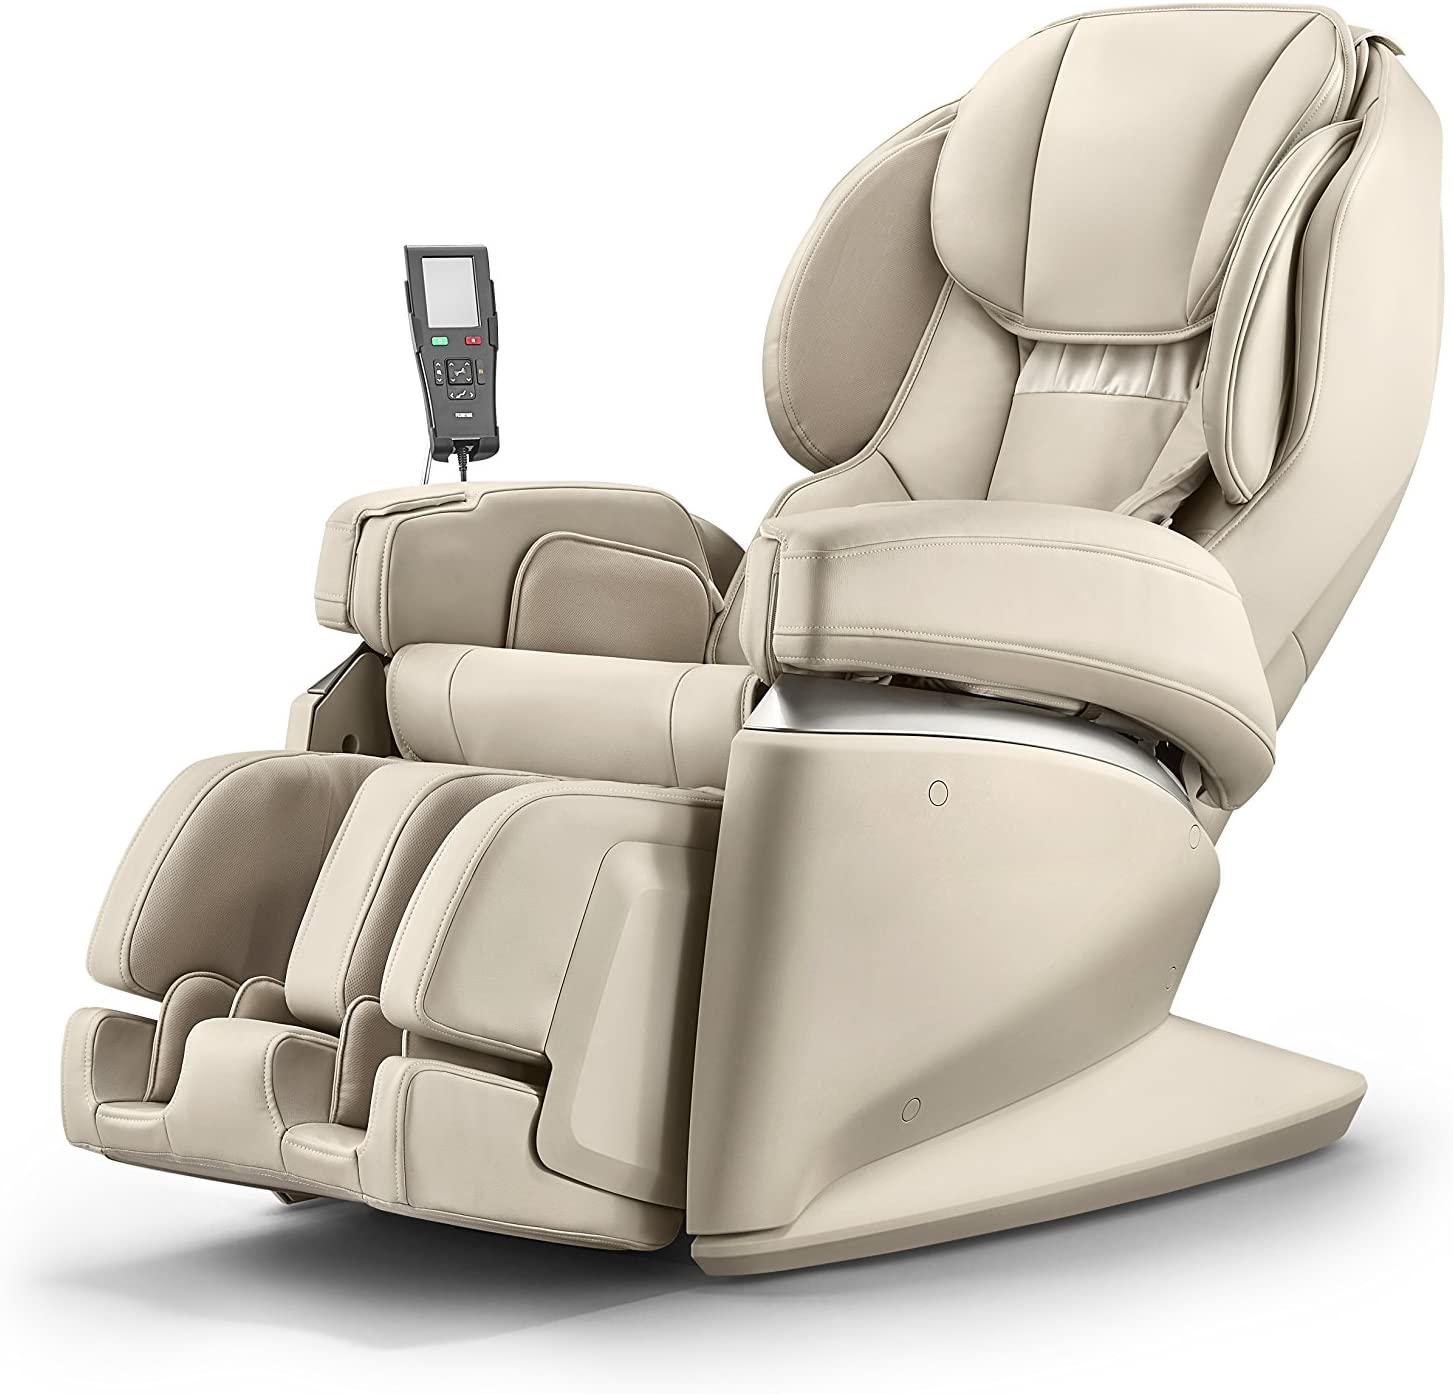 JP1100 4D Massage Chair by Synca Wellness